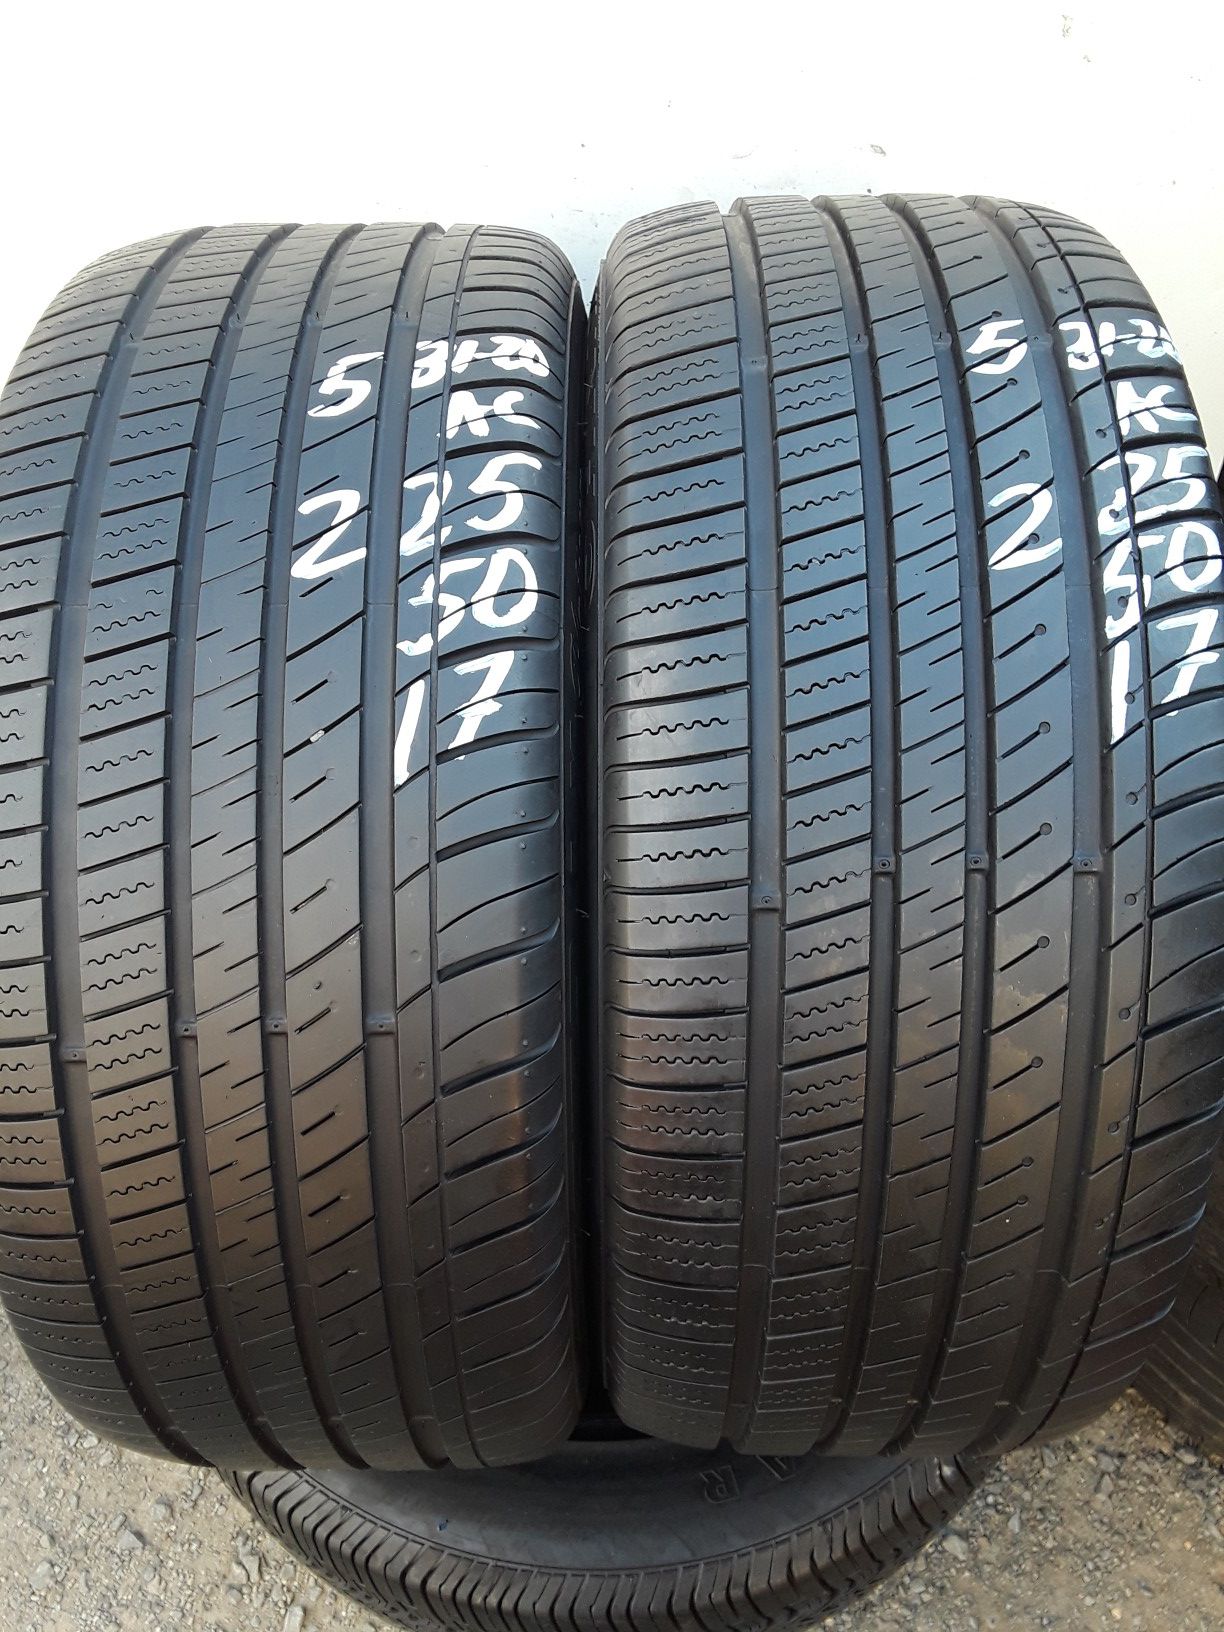 225/50-17 #2 tires